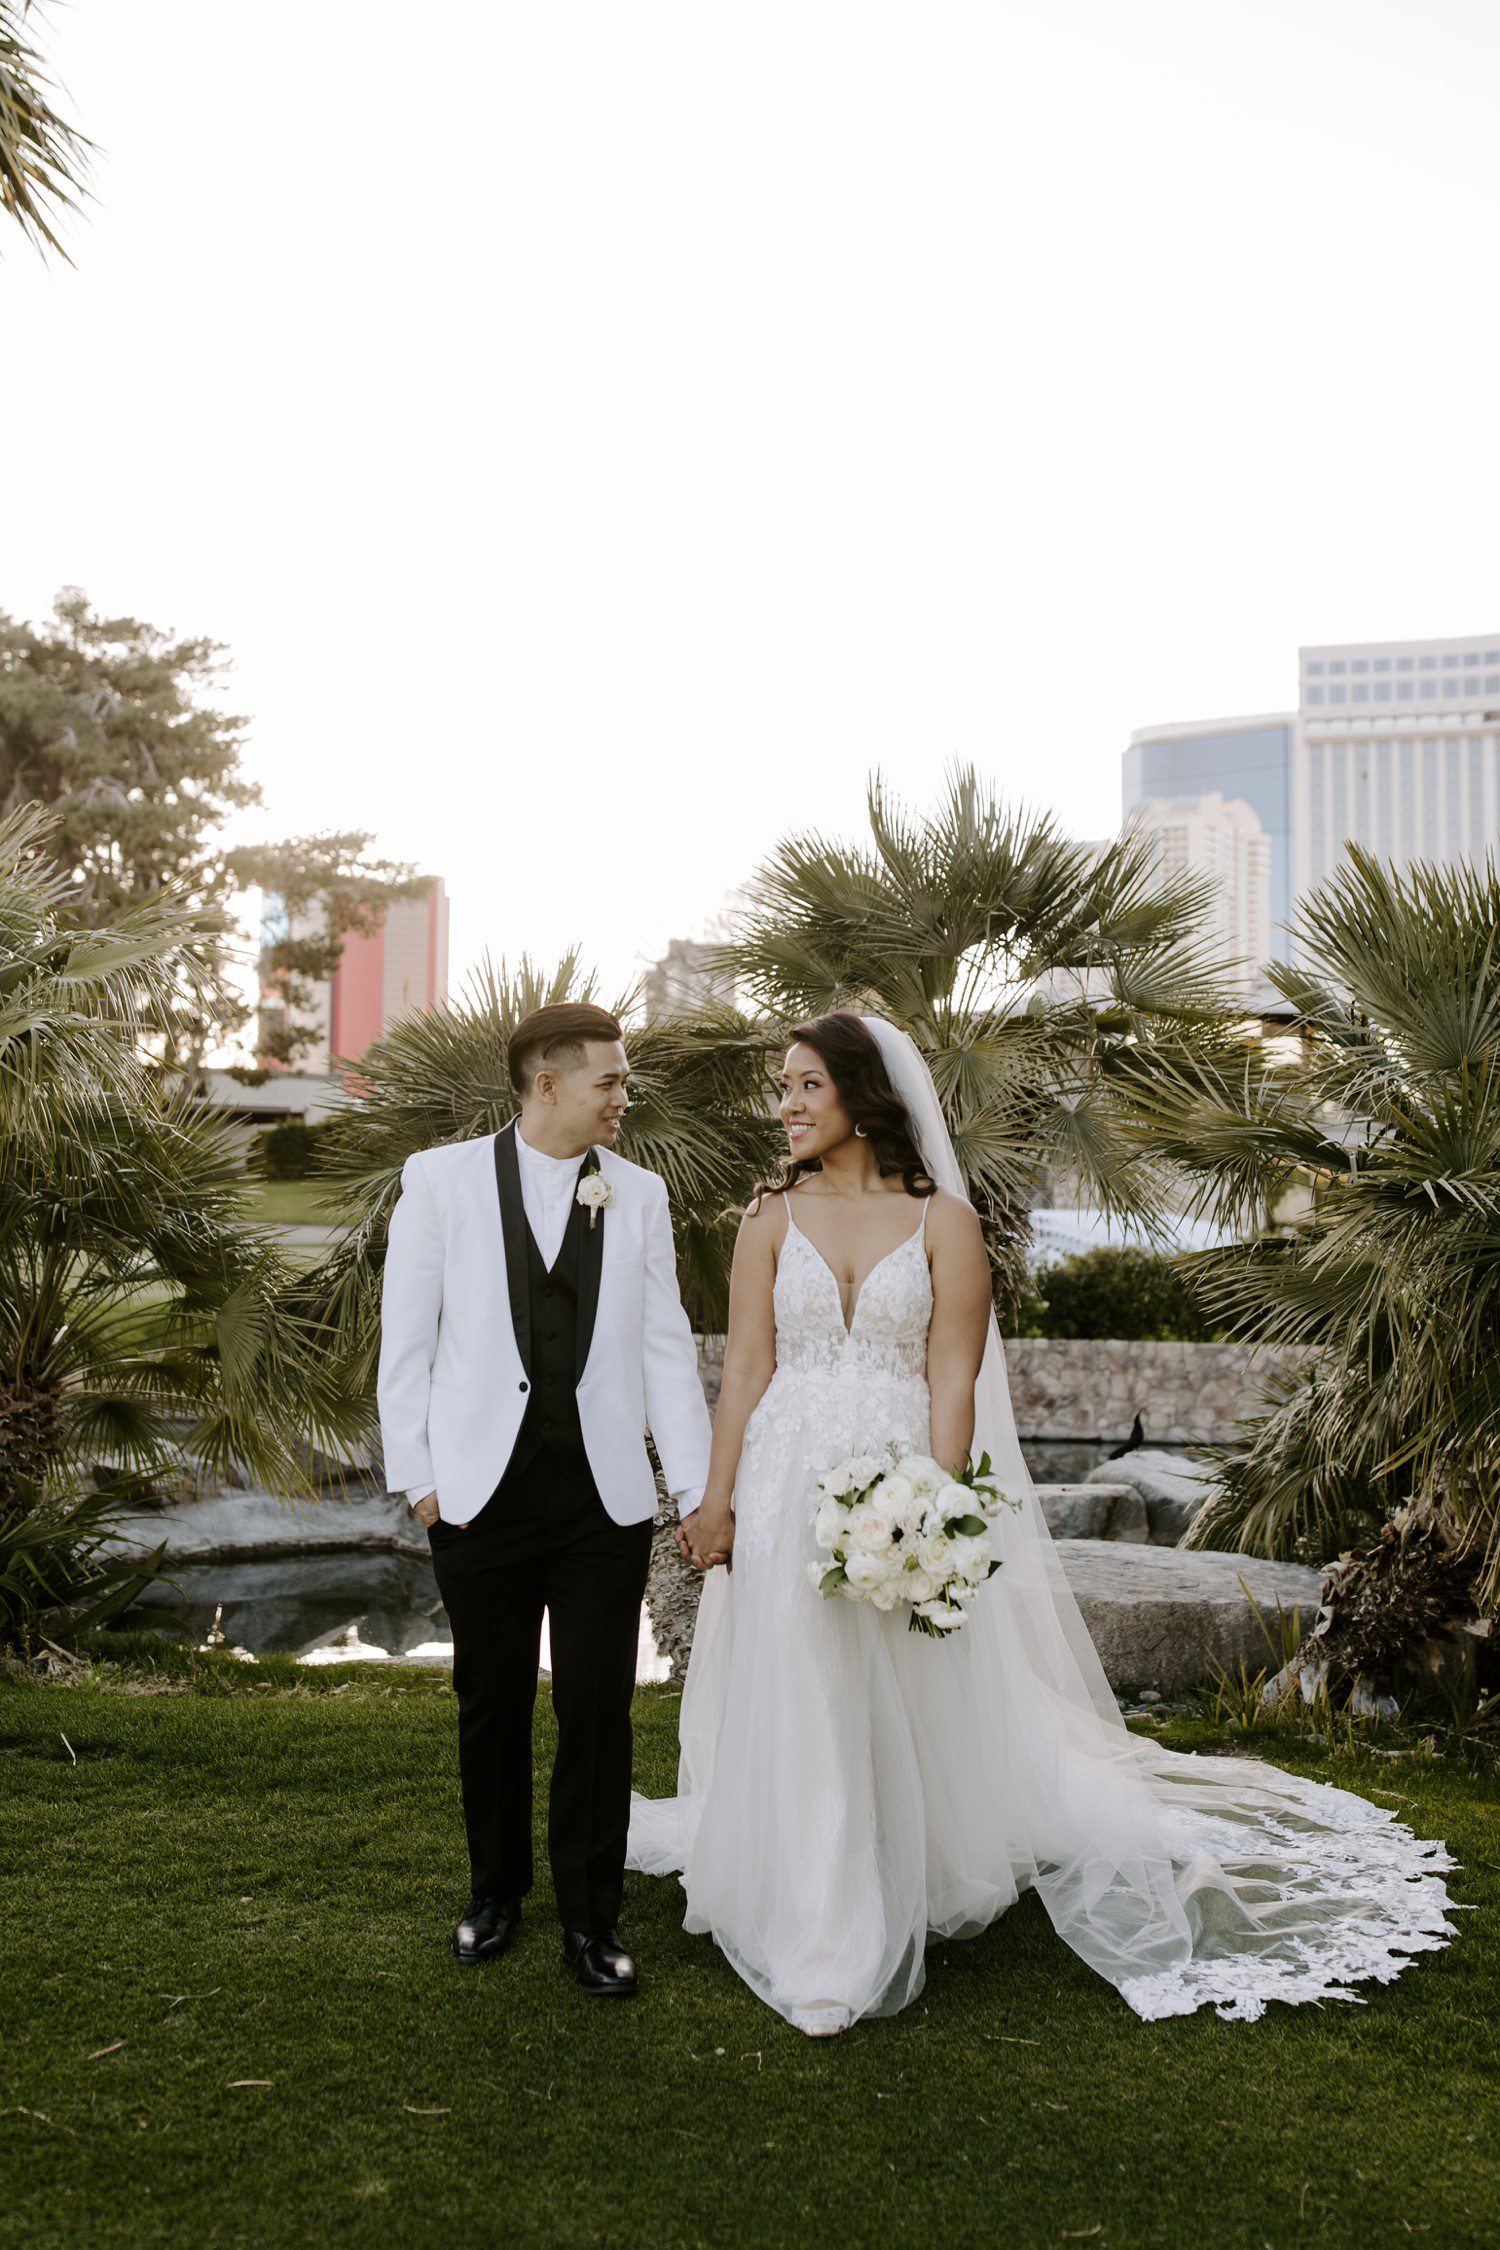 Wedding photos at Las Vegas Country Club.